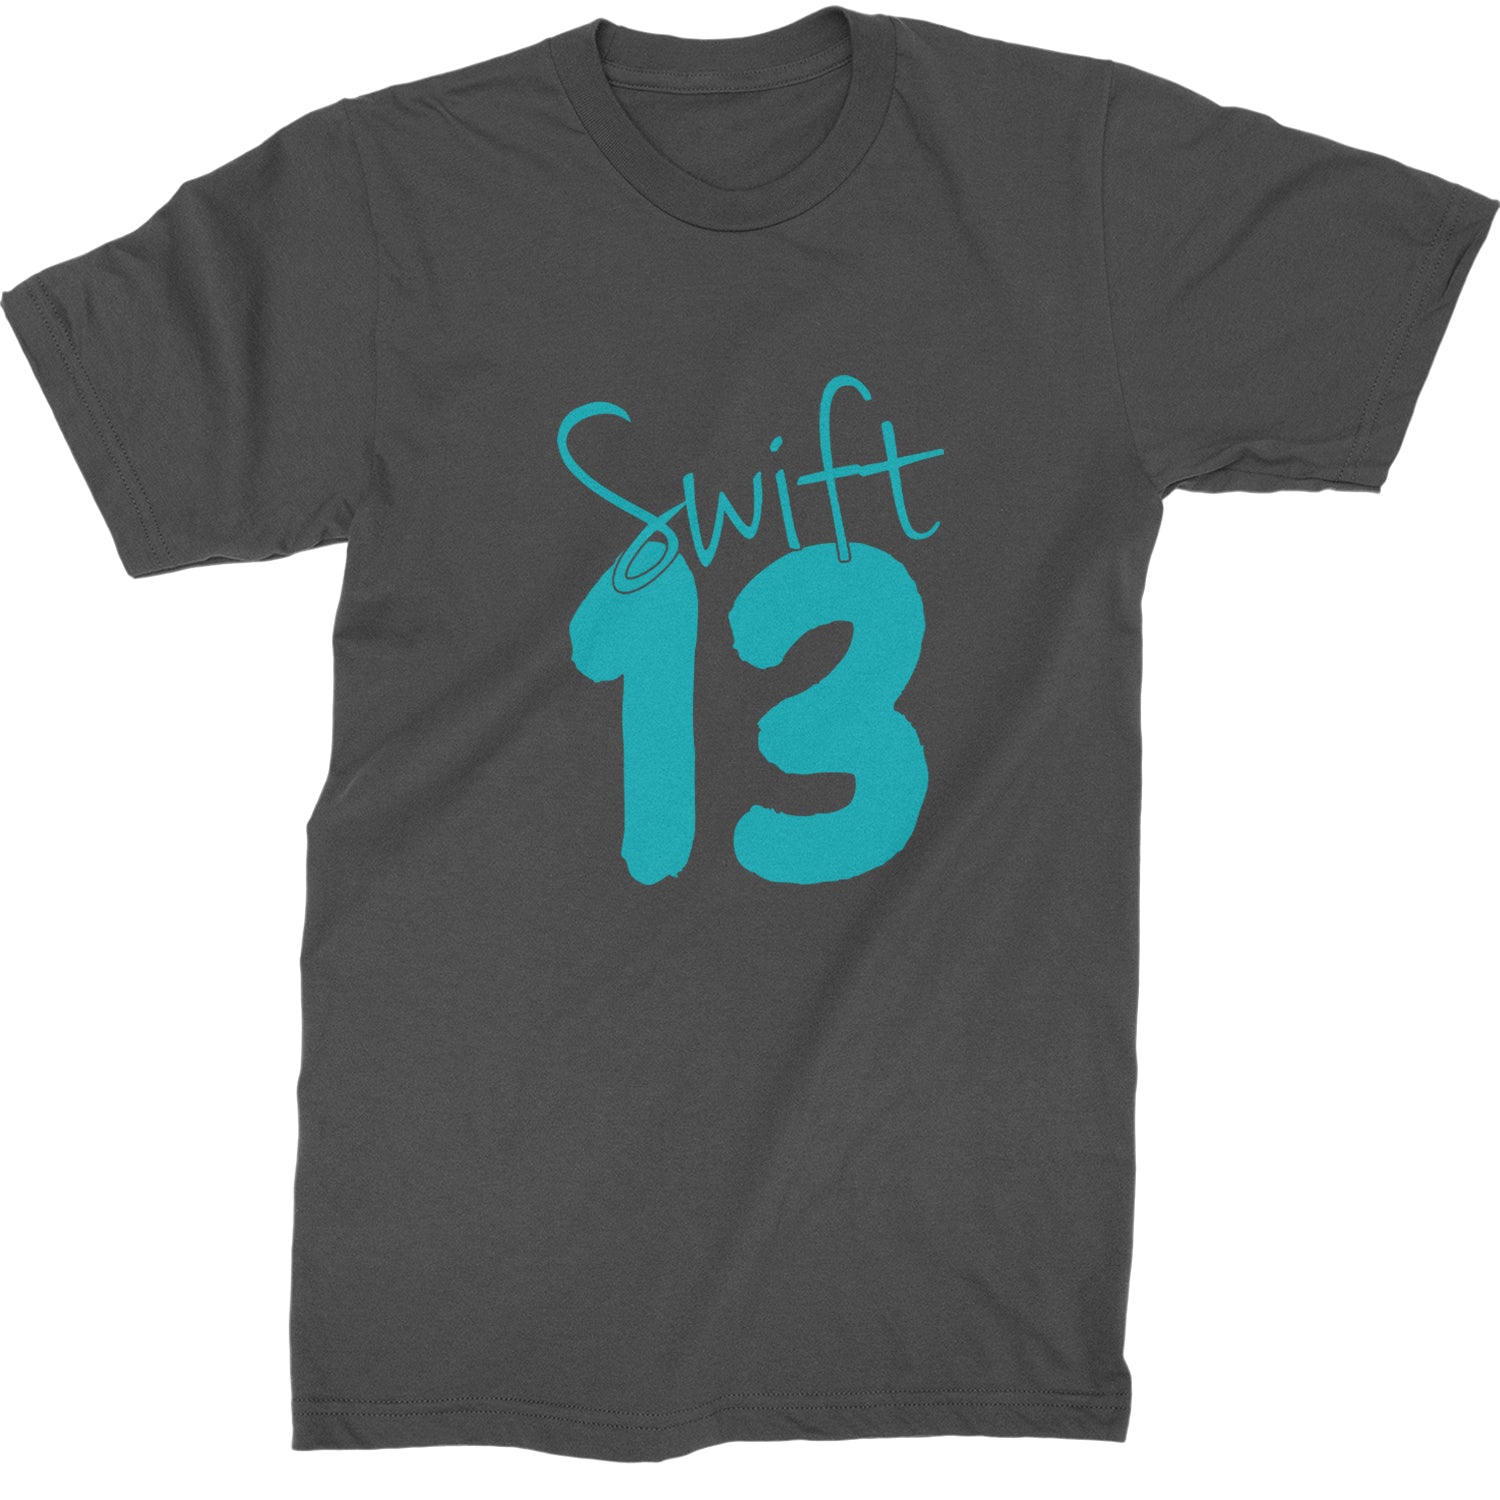 13 Swift 13 Lucky Number Era TTPD Mens T-shirt Charcoal Grey